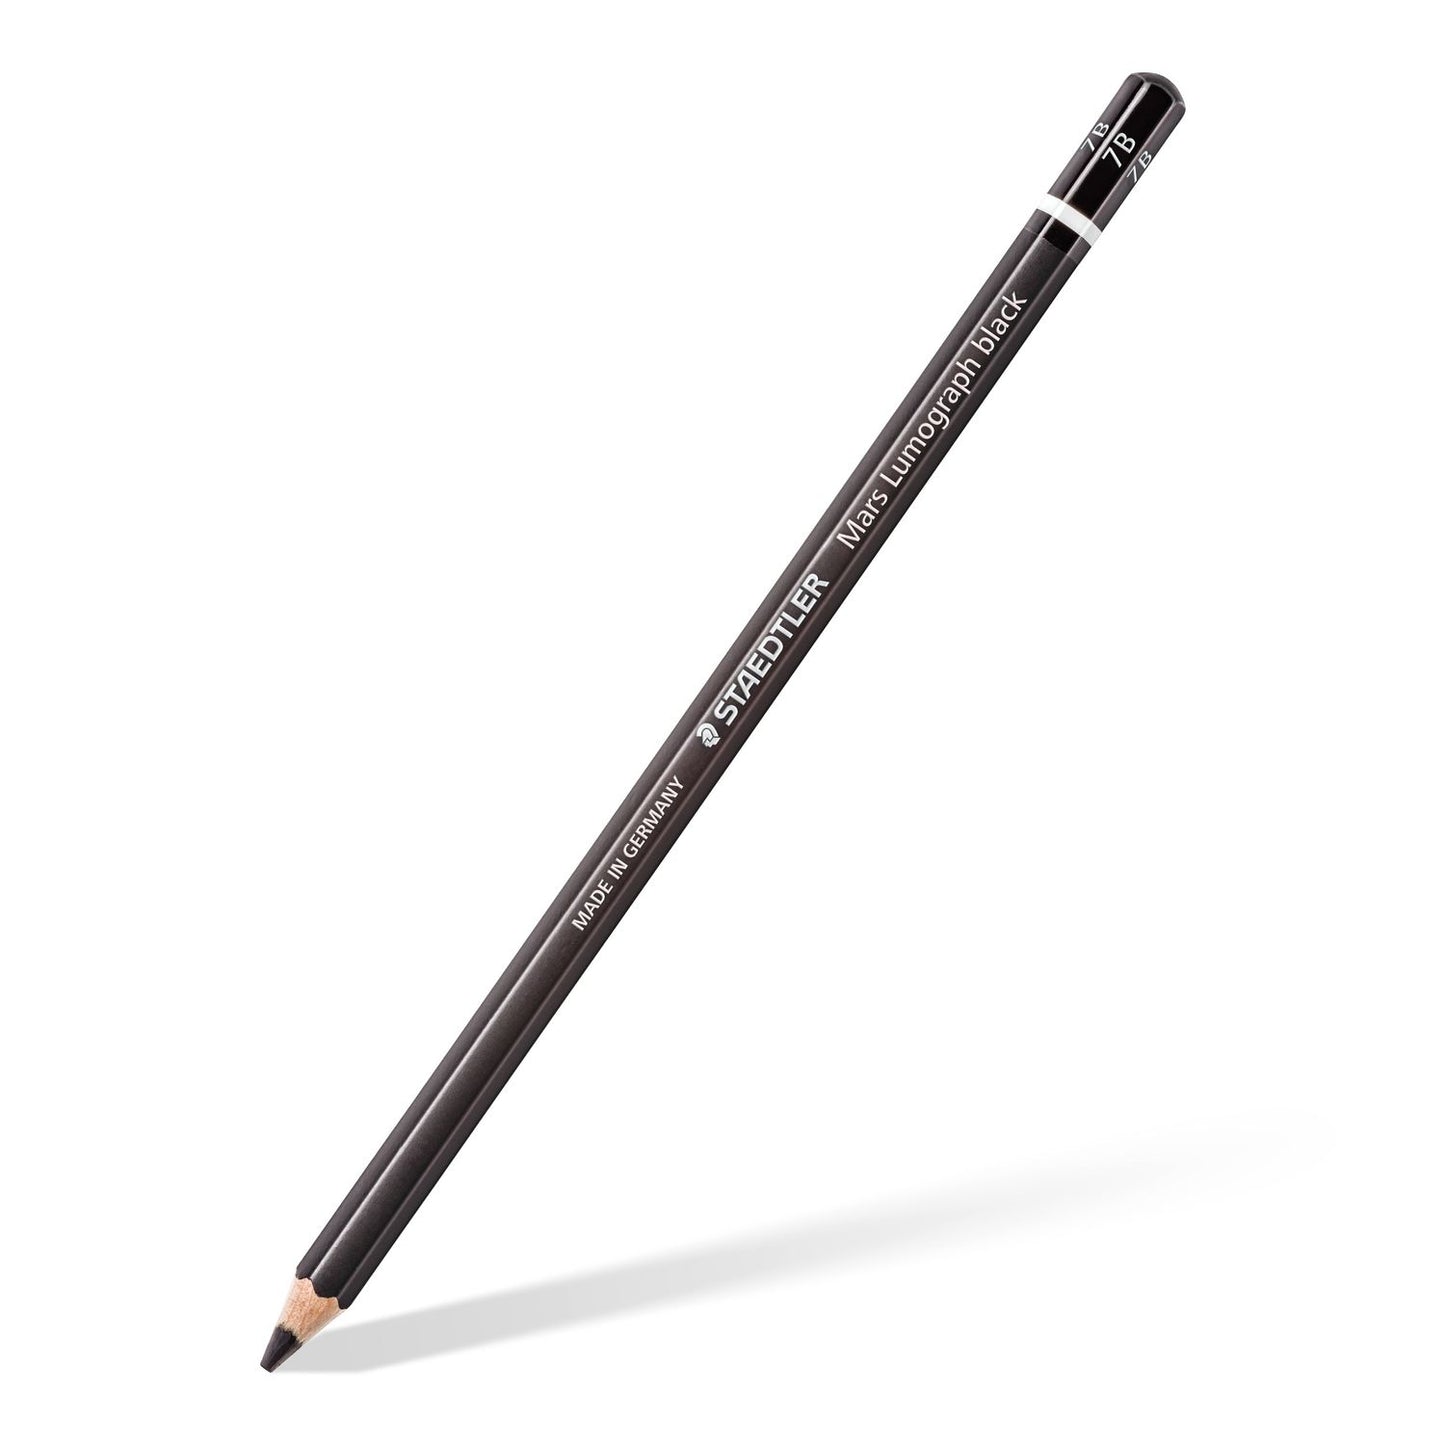 Staedtler Mars Lumograph Black Pencil 100B | Sold by 12s